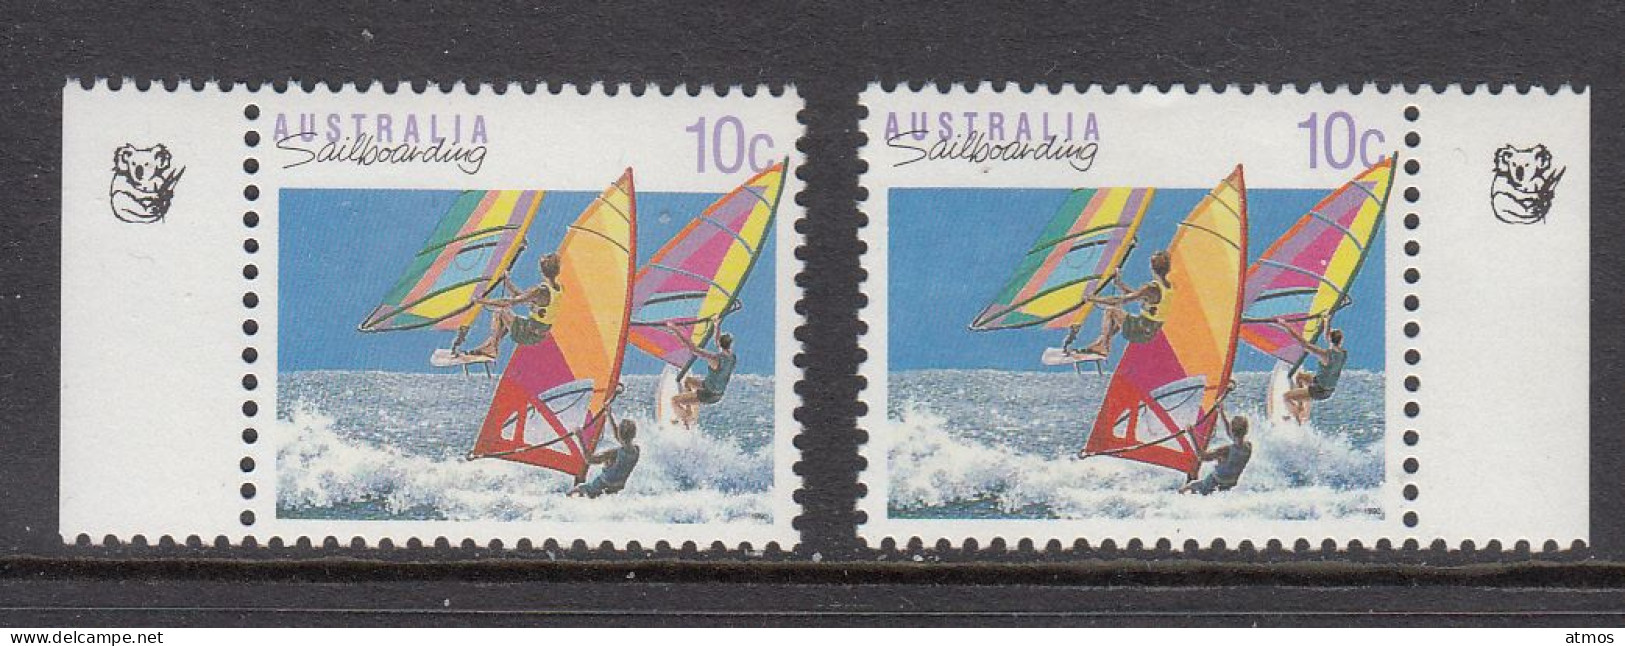 Australia MNH Michel Nr 1183 From 1990 Reprint 1 Koala - Ungebraucht